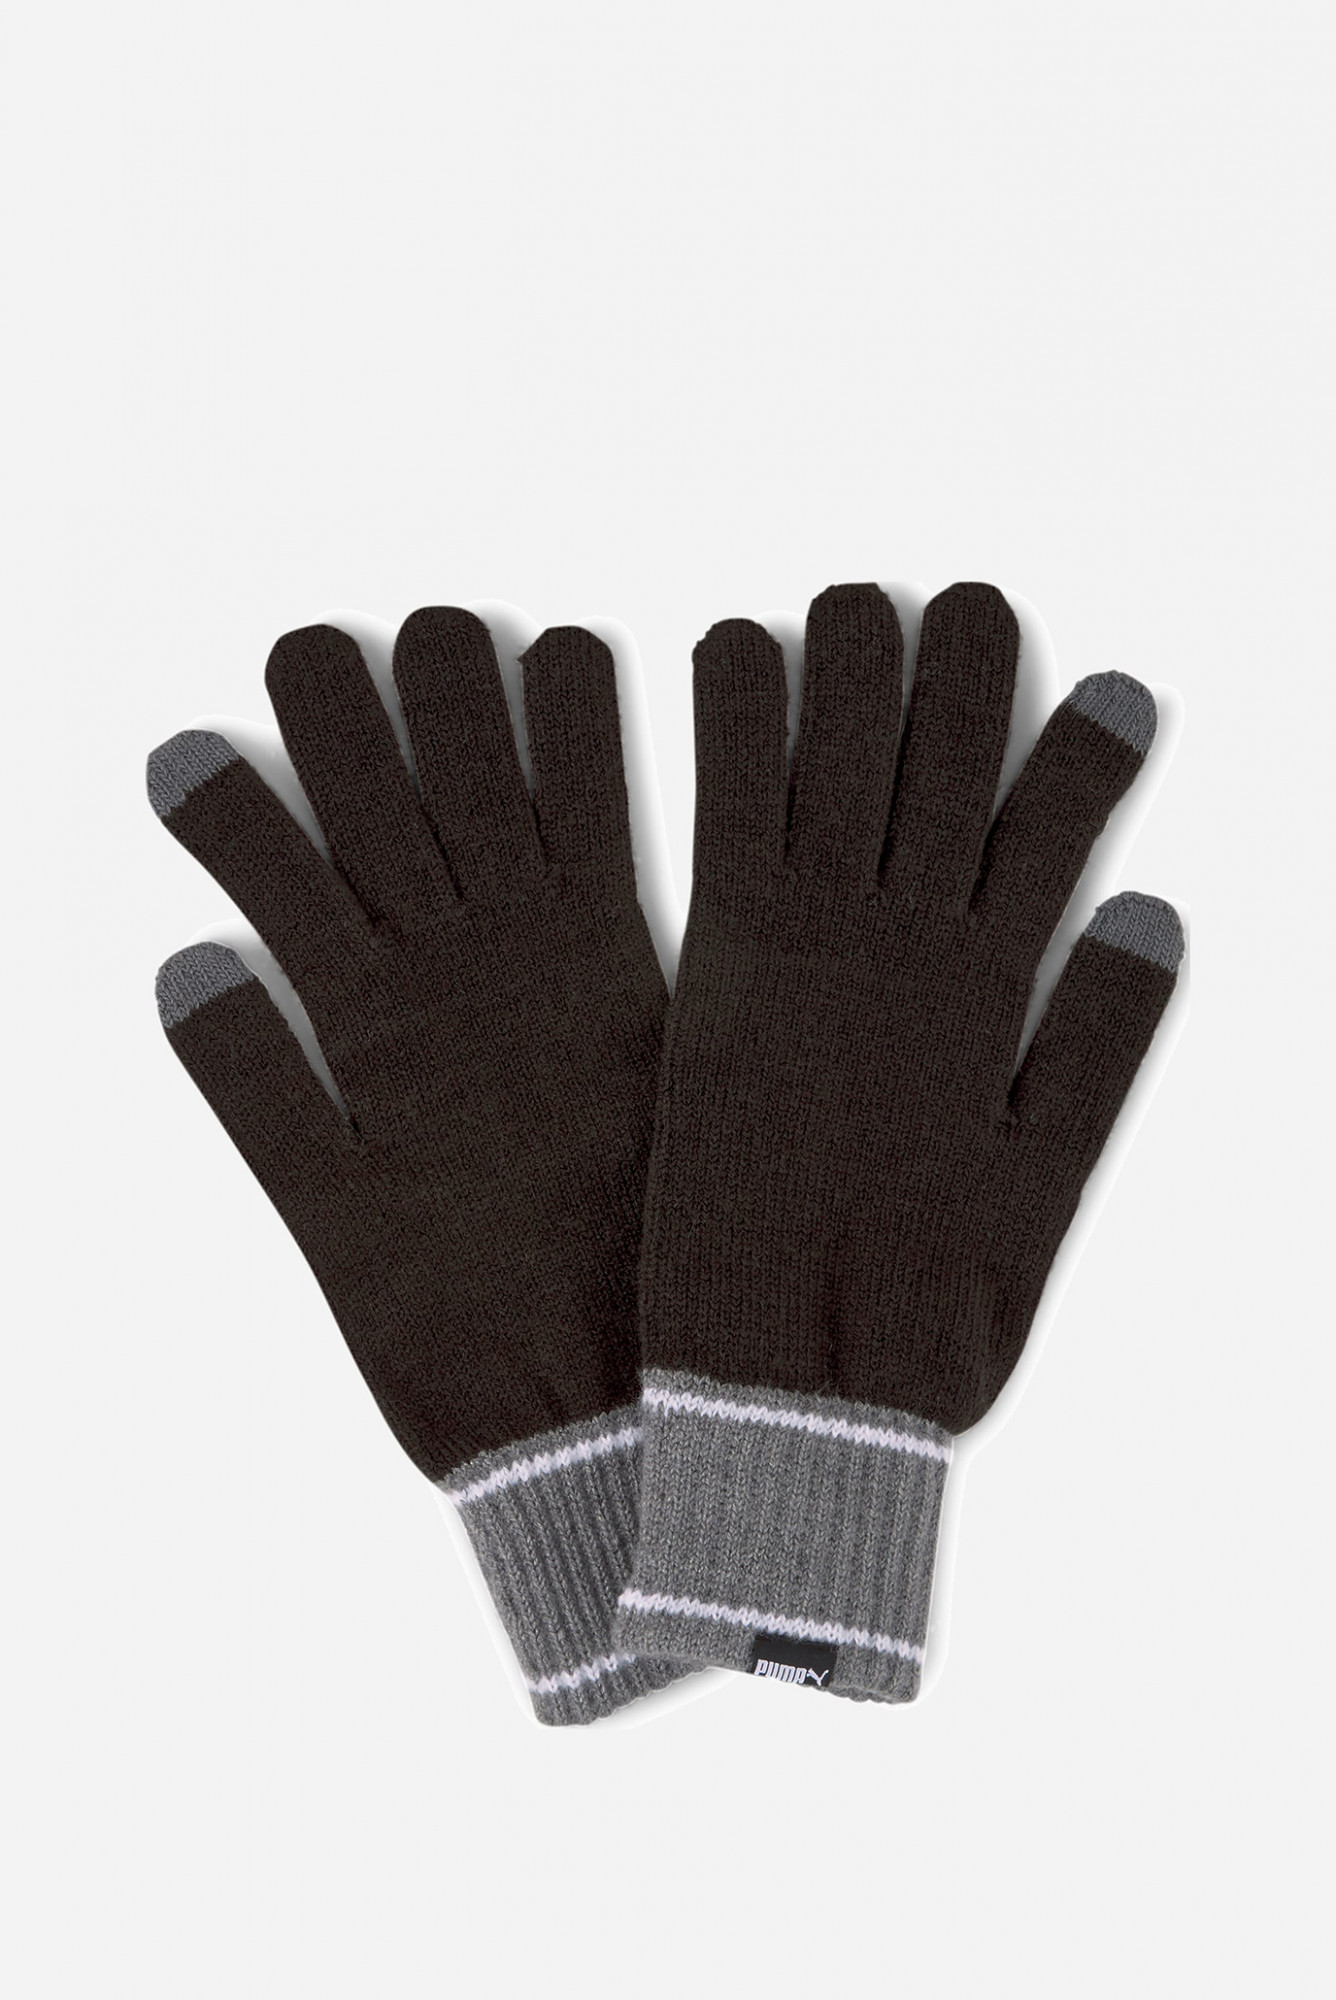 Рукавички   Puma Knit Gloves чорні 04177201 изображение 2